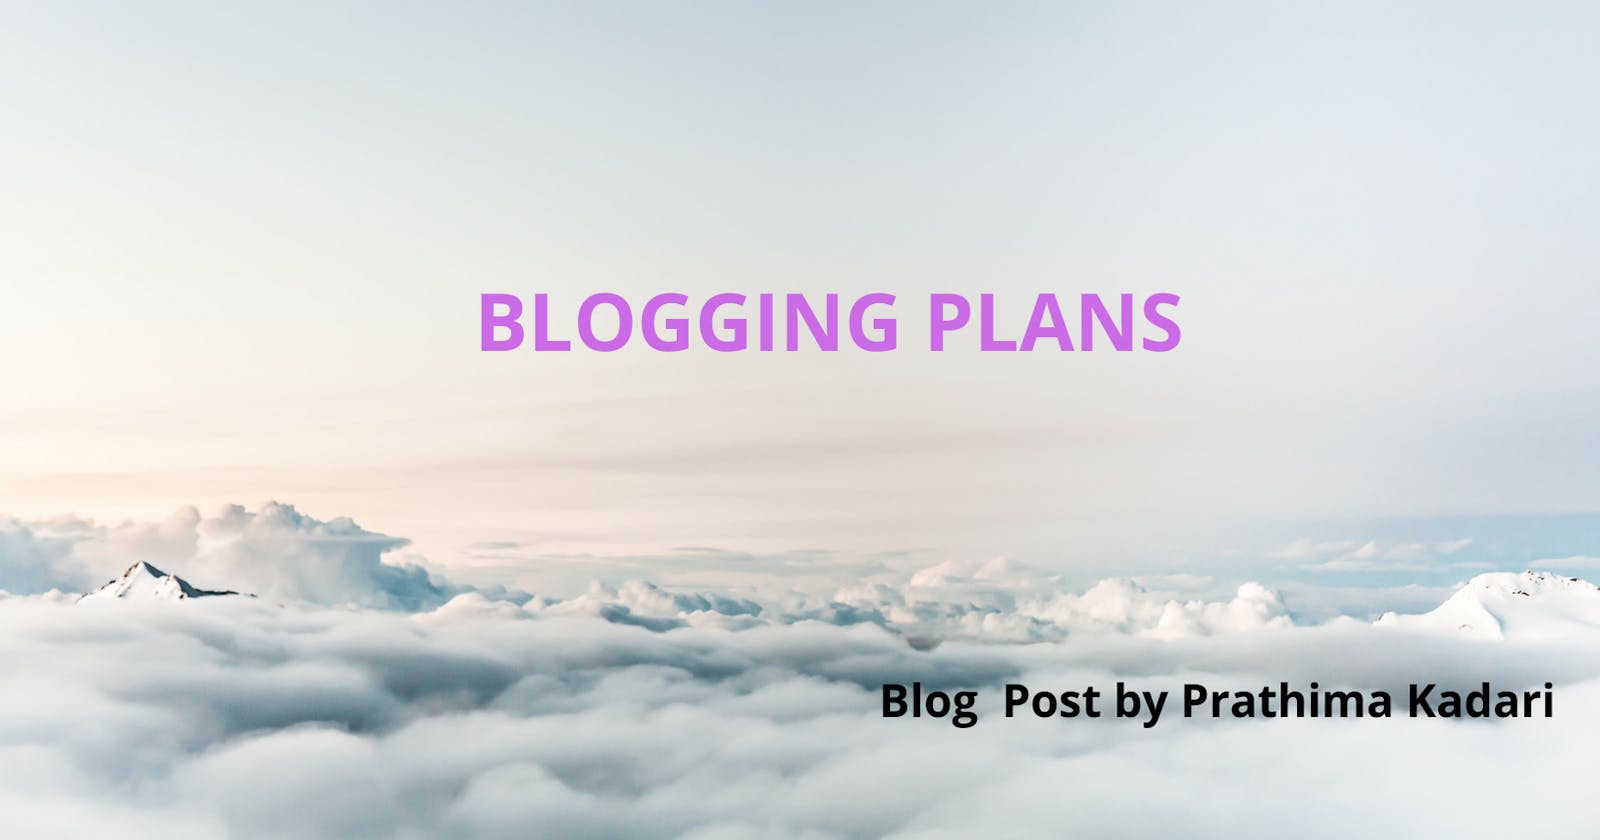 My Lane of Blogging Plans